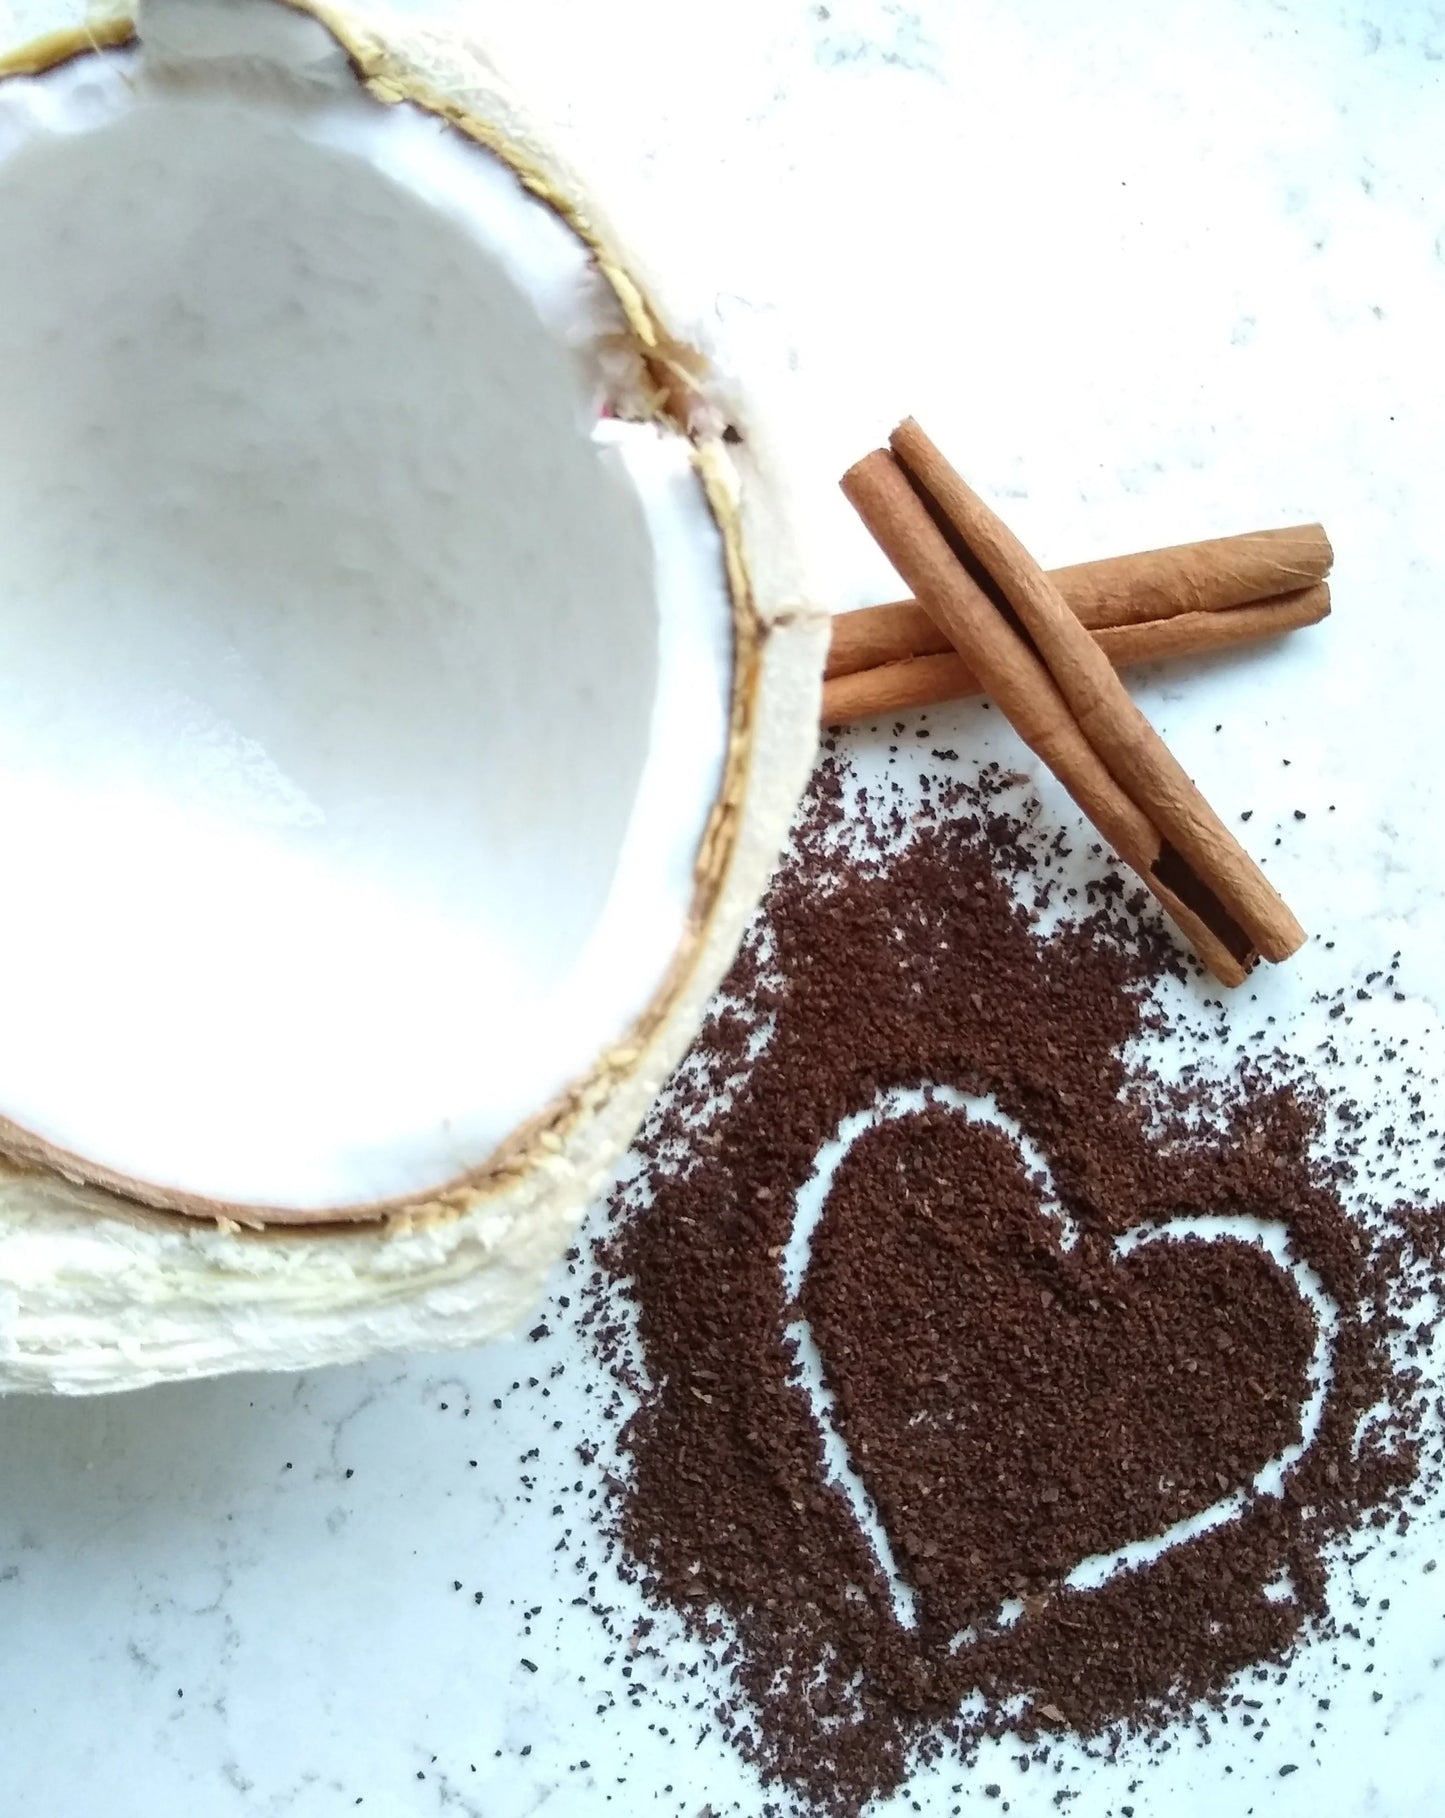 Coconut + Coffee Body Scrub